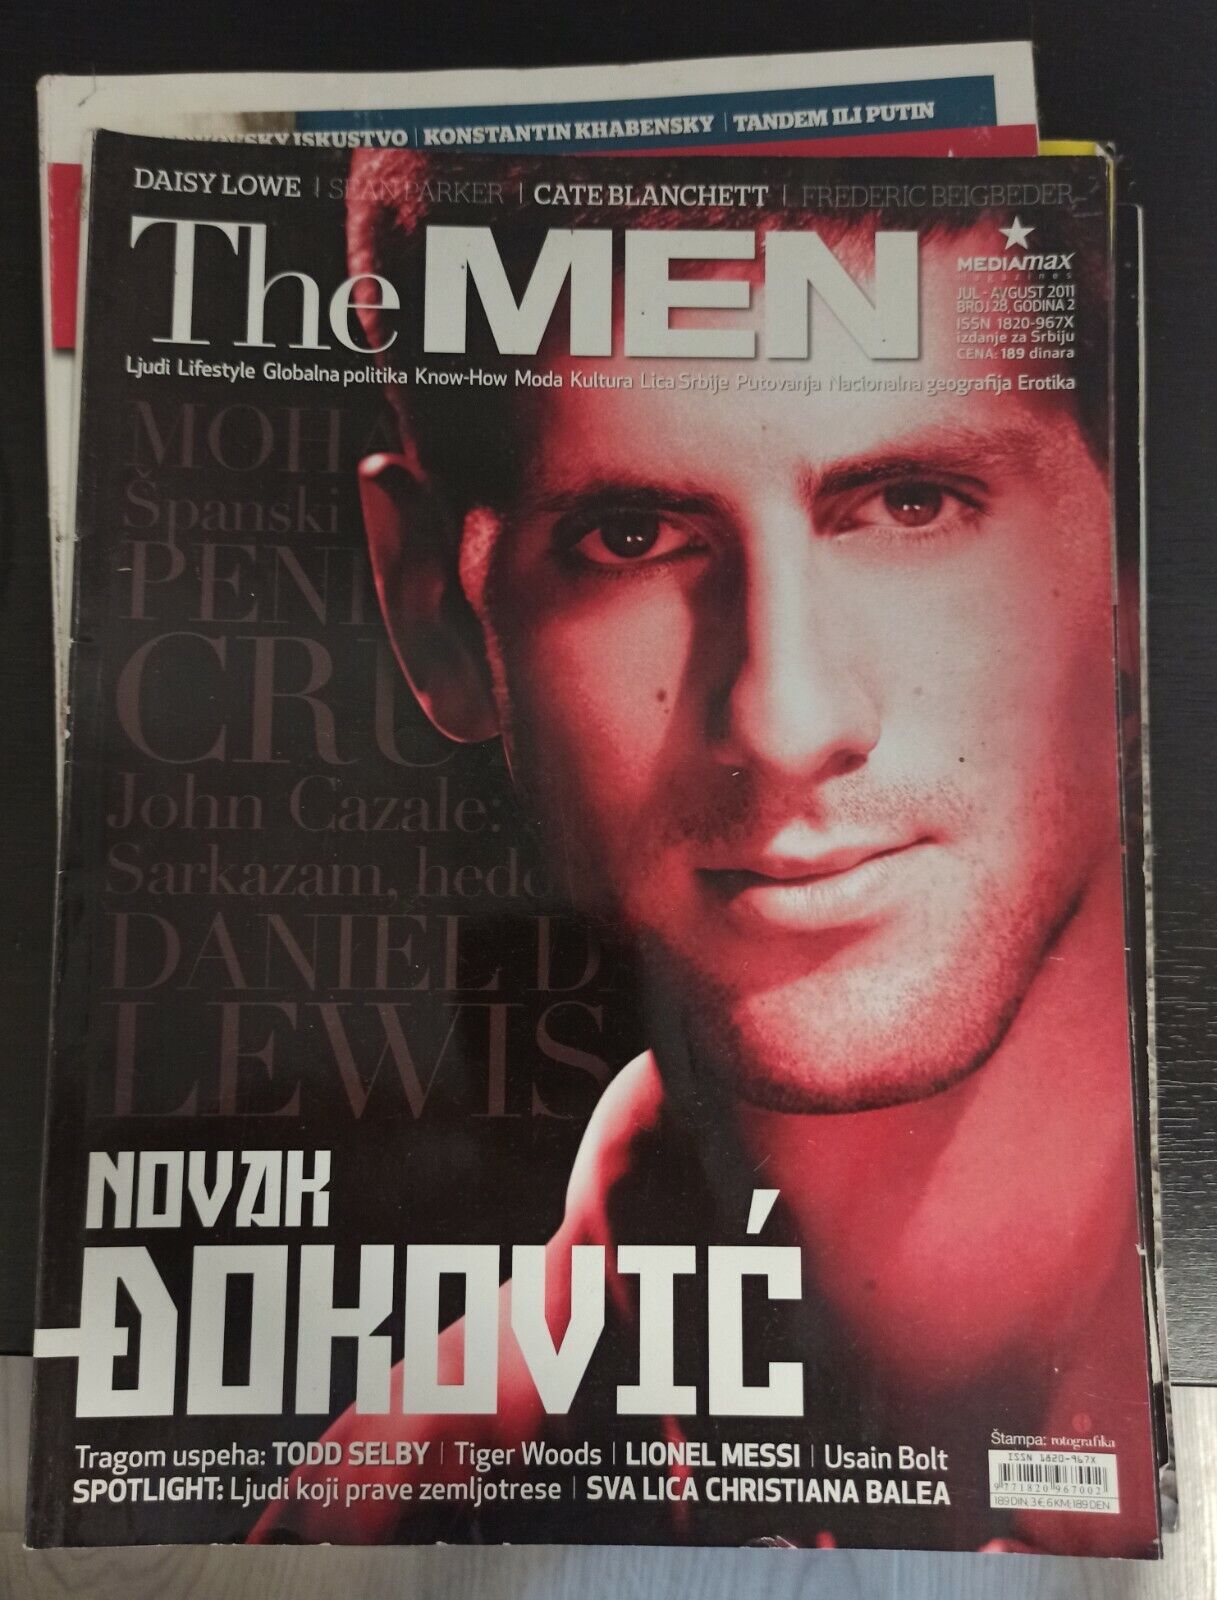 NOVAK DJOKOVIC - THE MAN MAGAZIN SERBIAN ISSUE - At the beginning of his carrer